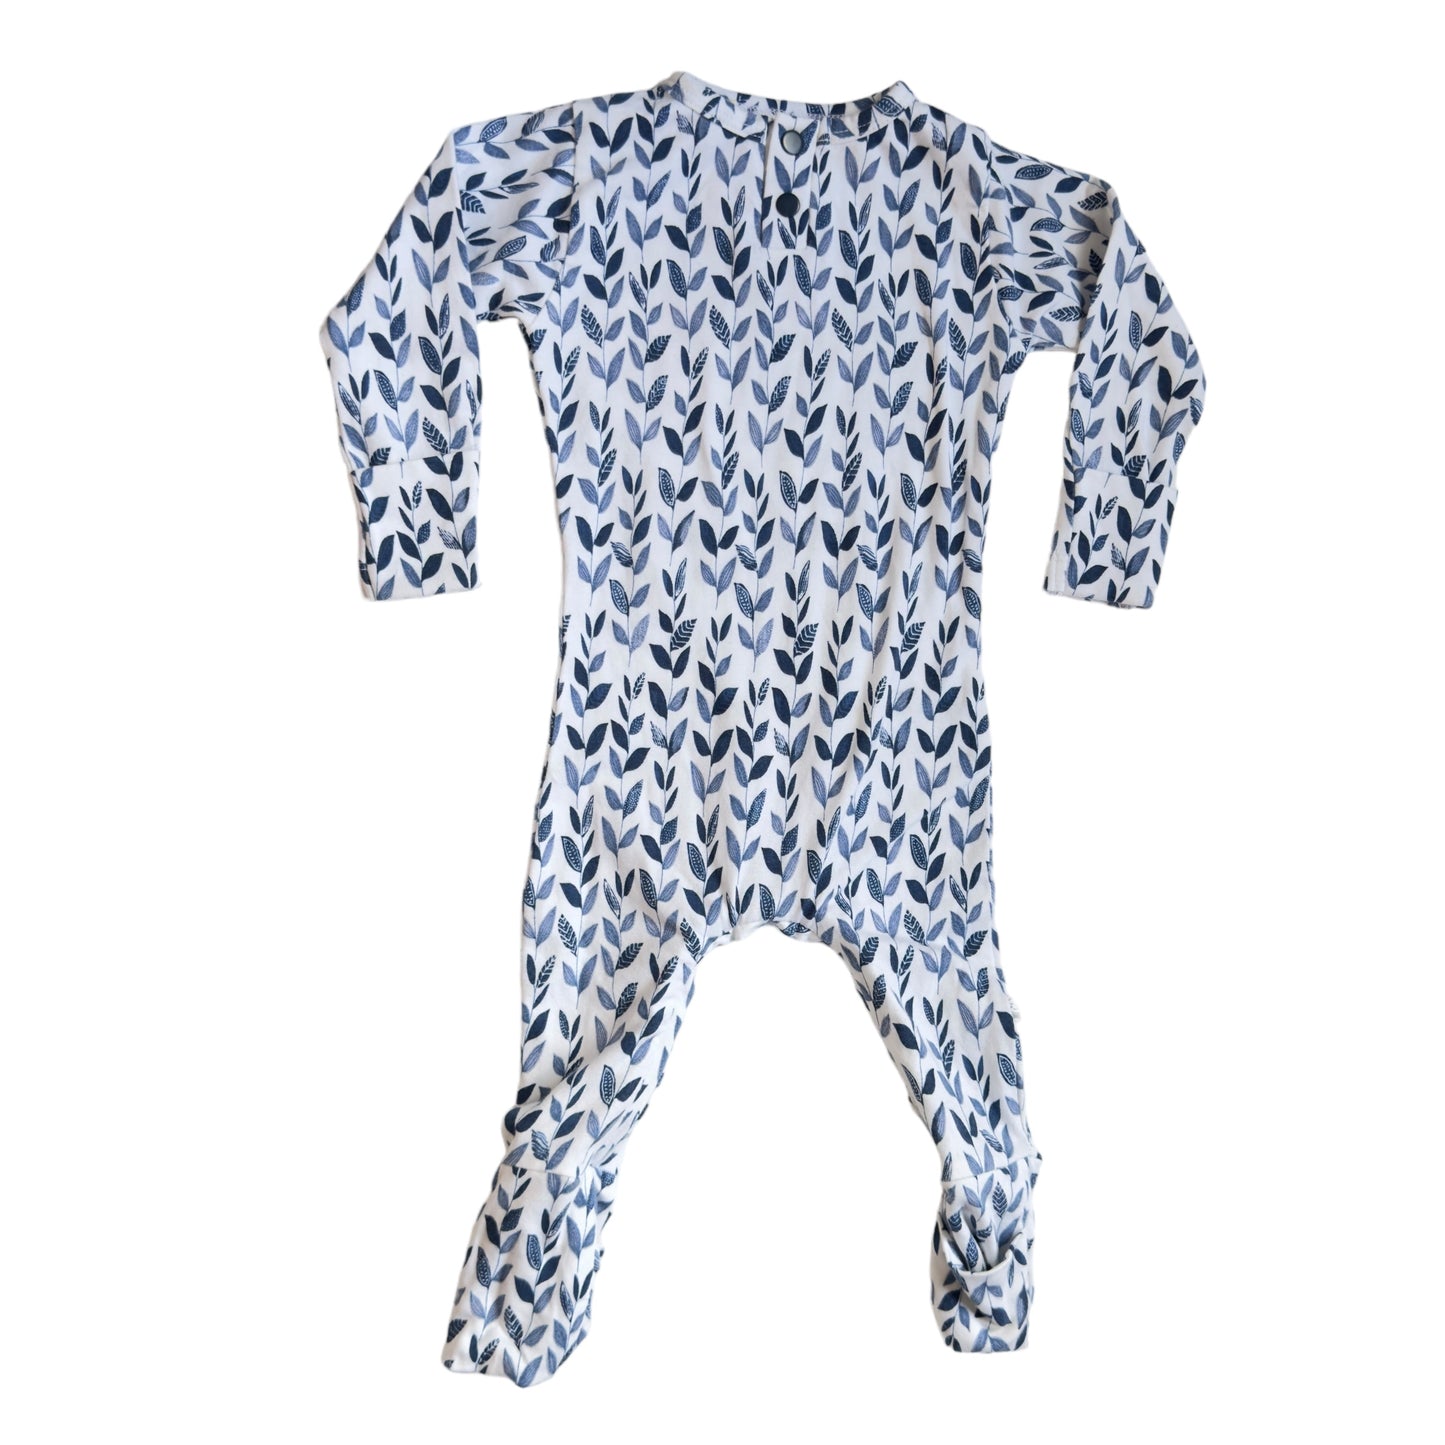 Snuggle Hunny grow suit | 0-3 months| blue & white | EUC| Organic cotton